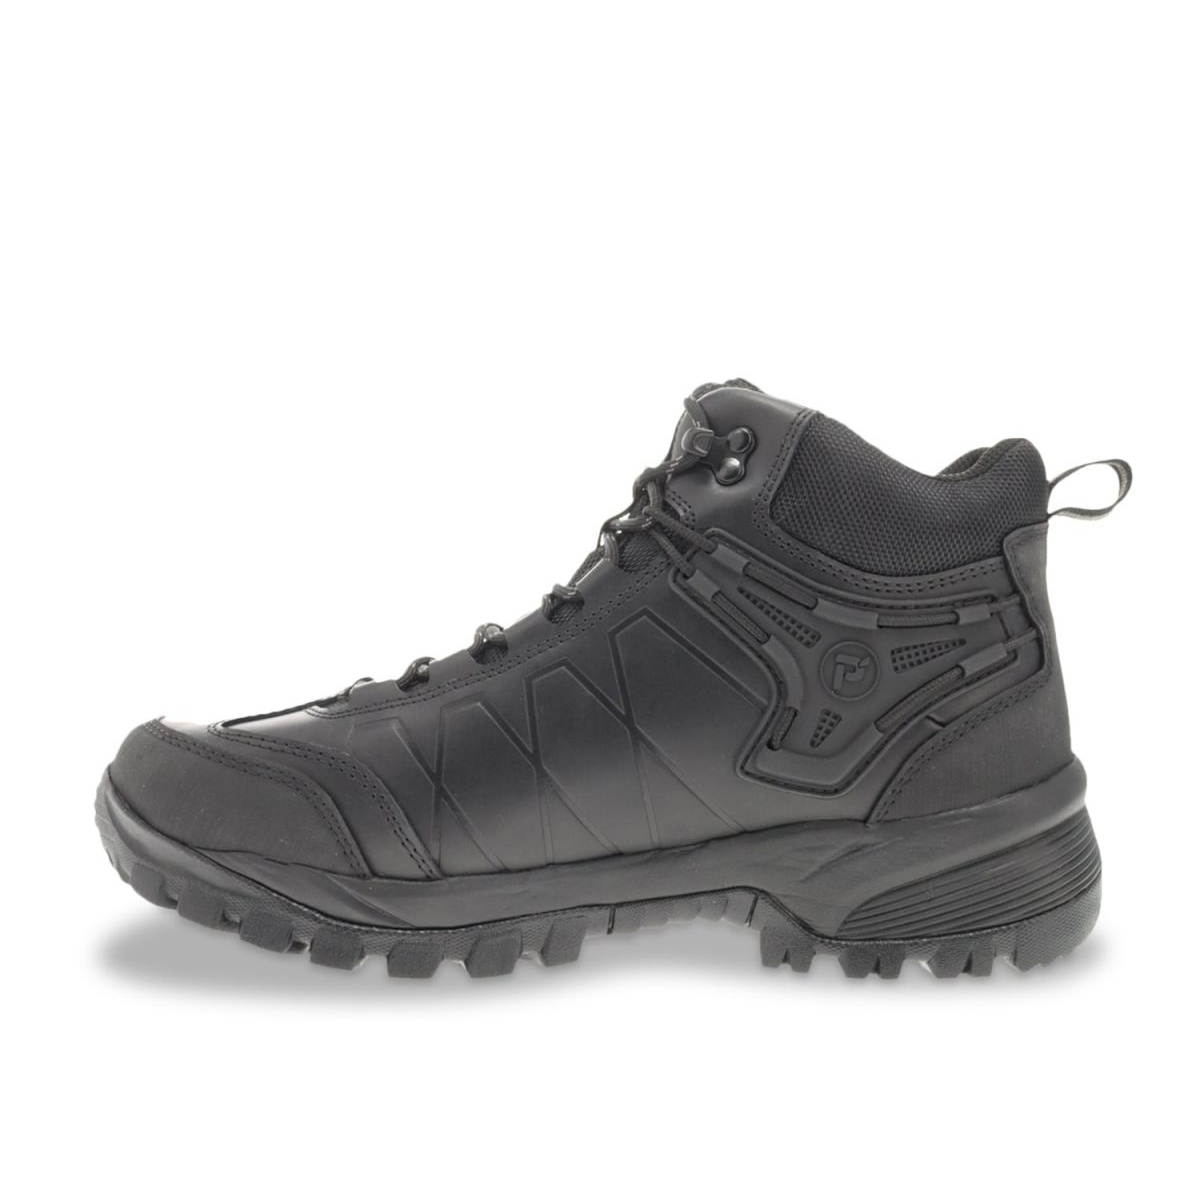 Propet Men's Ridge Walker Force Hiking Boots Black - MBA052LBLK BLACK - BLACK, 13